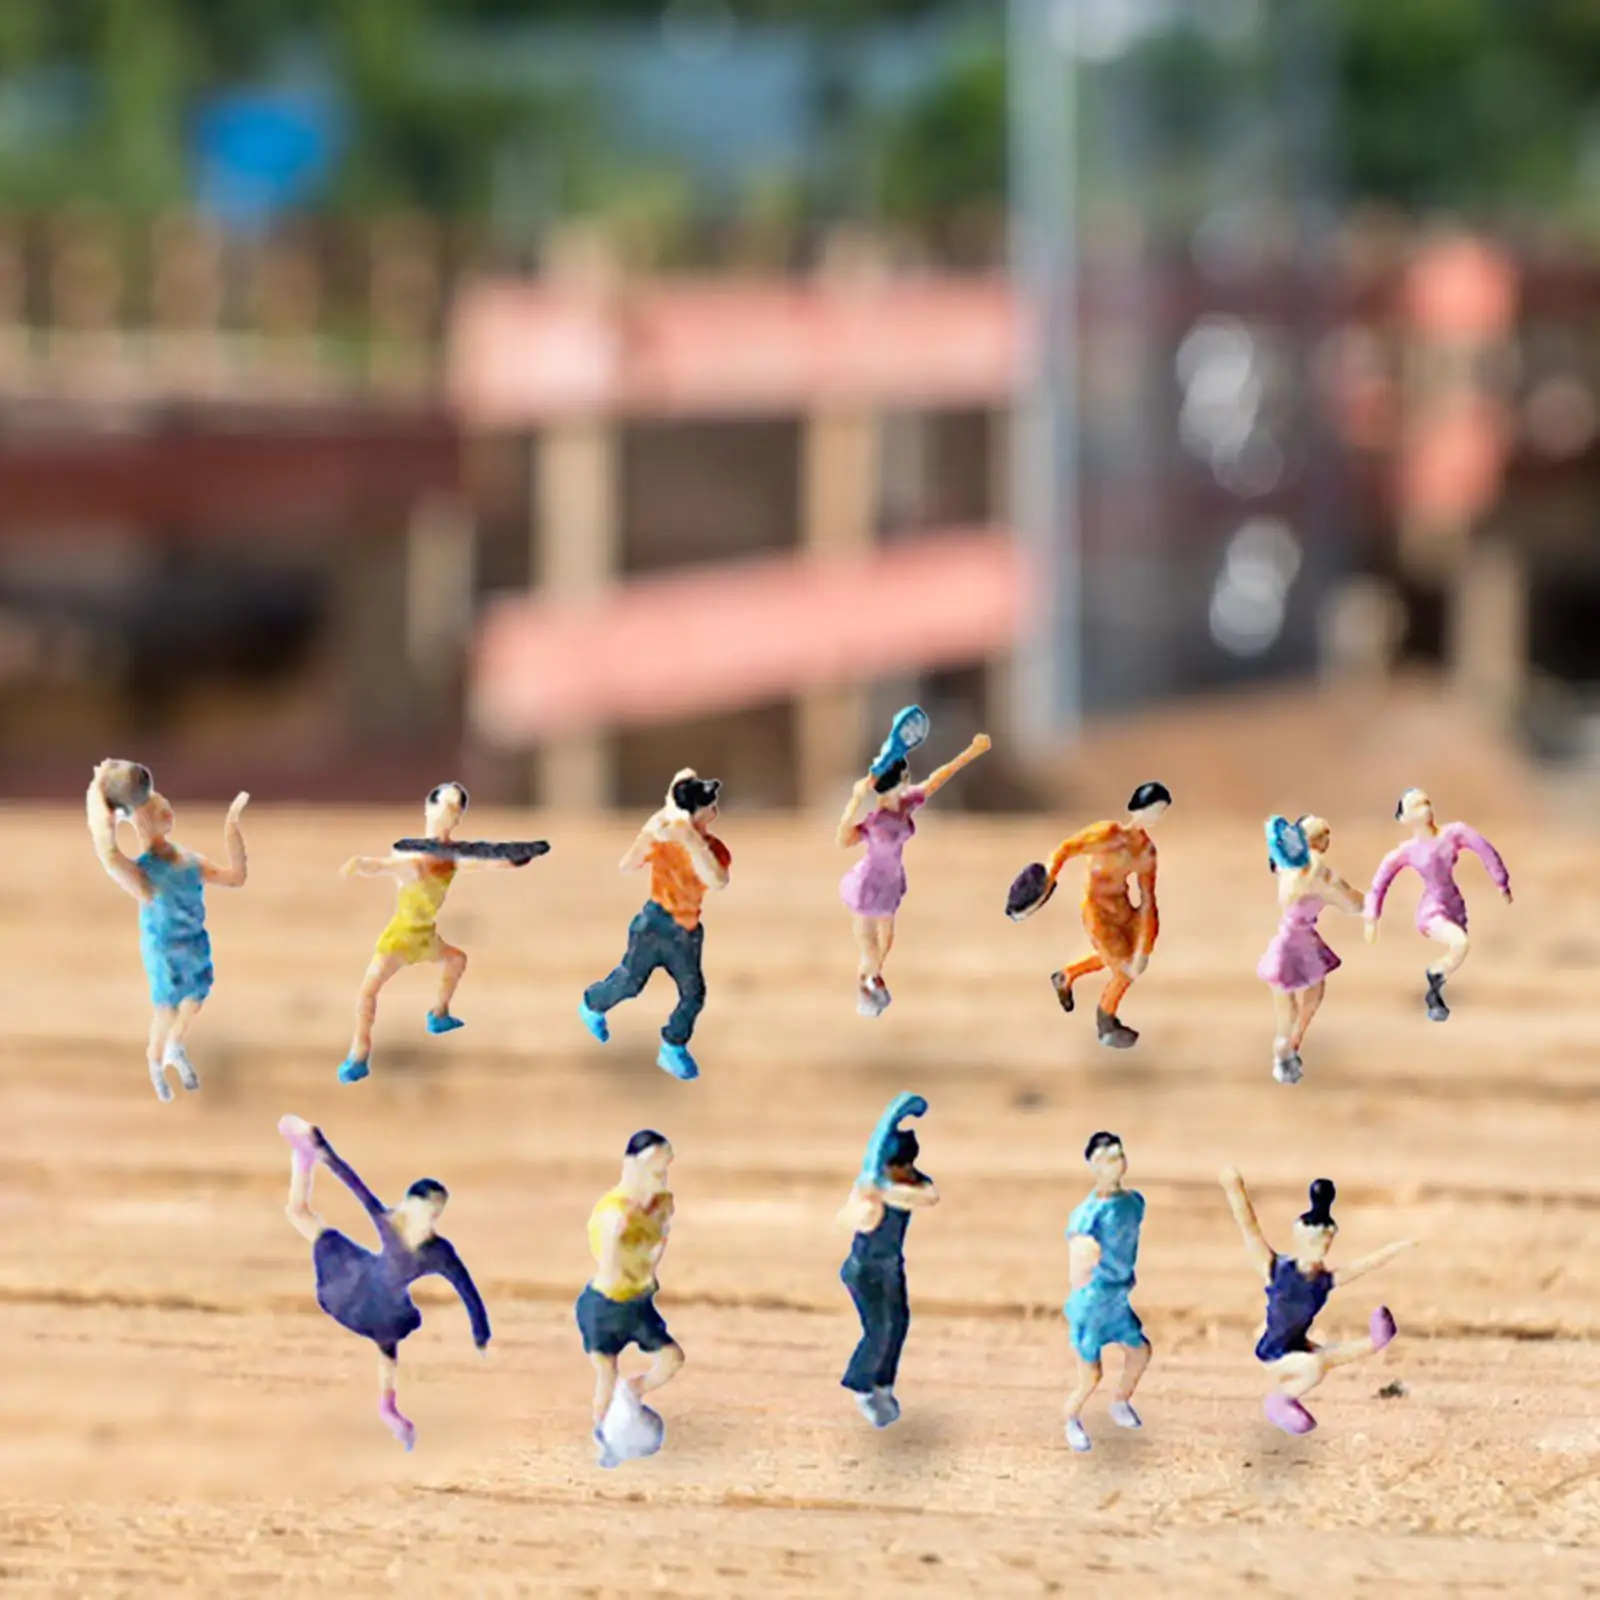 Miniature Sports Doll Figure for Diorama Layout Micro Landscapes Decor Miniature Scenes Decor Dollhouse Decor Desktop Ornament